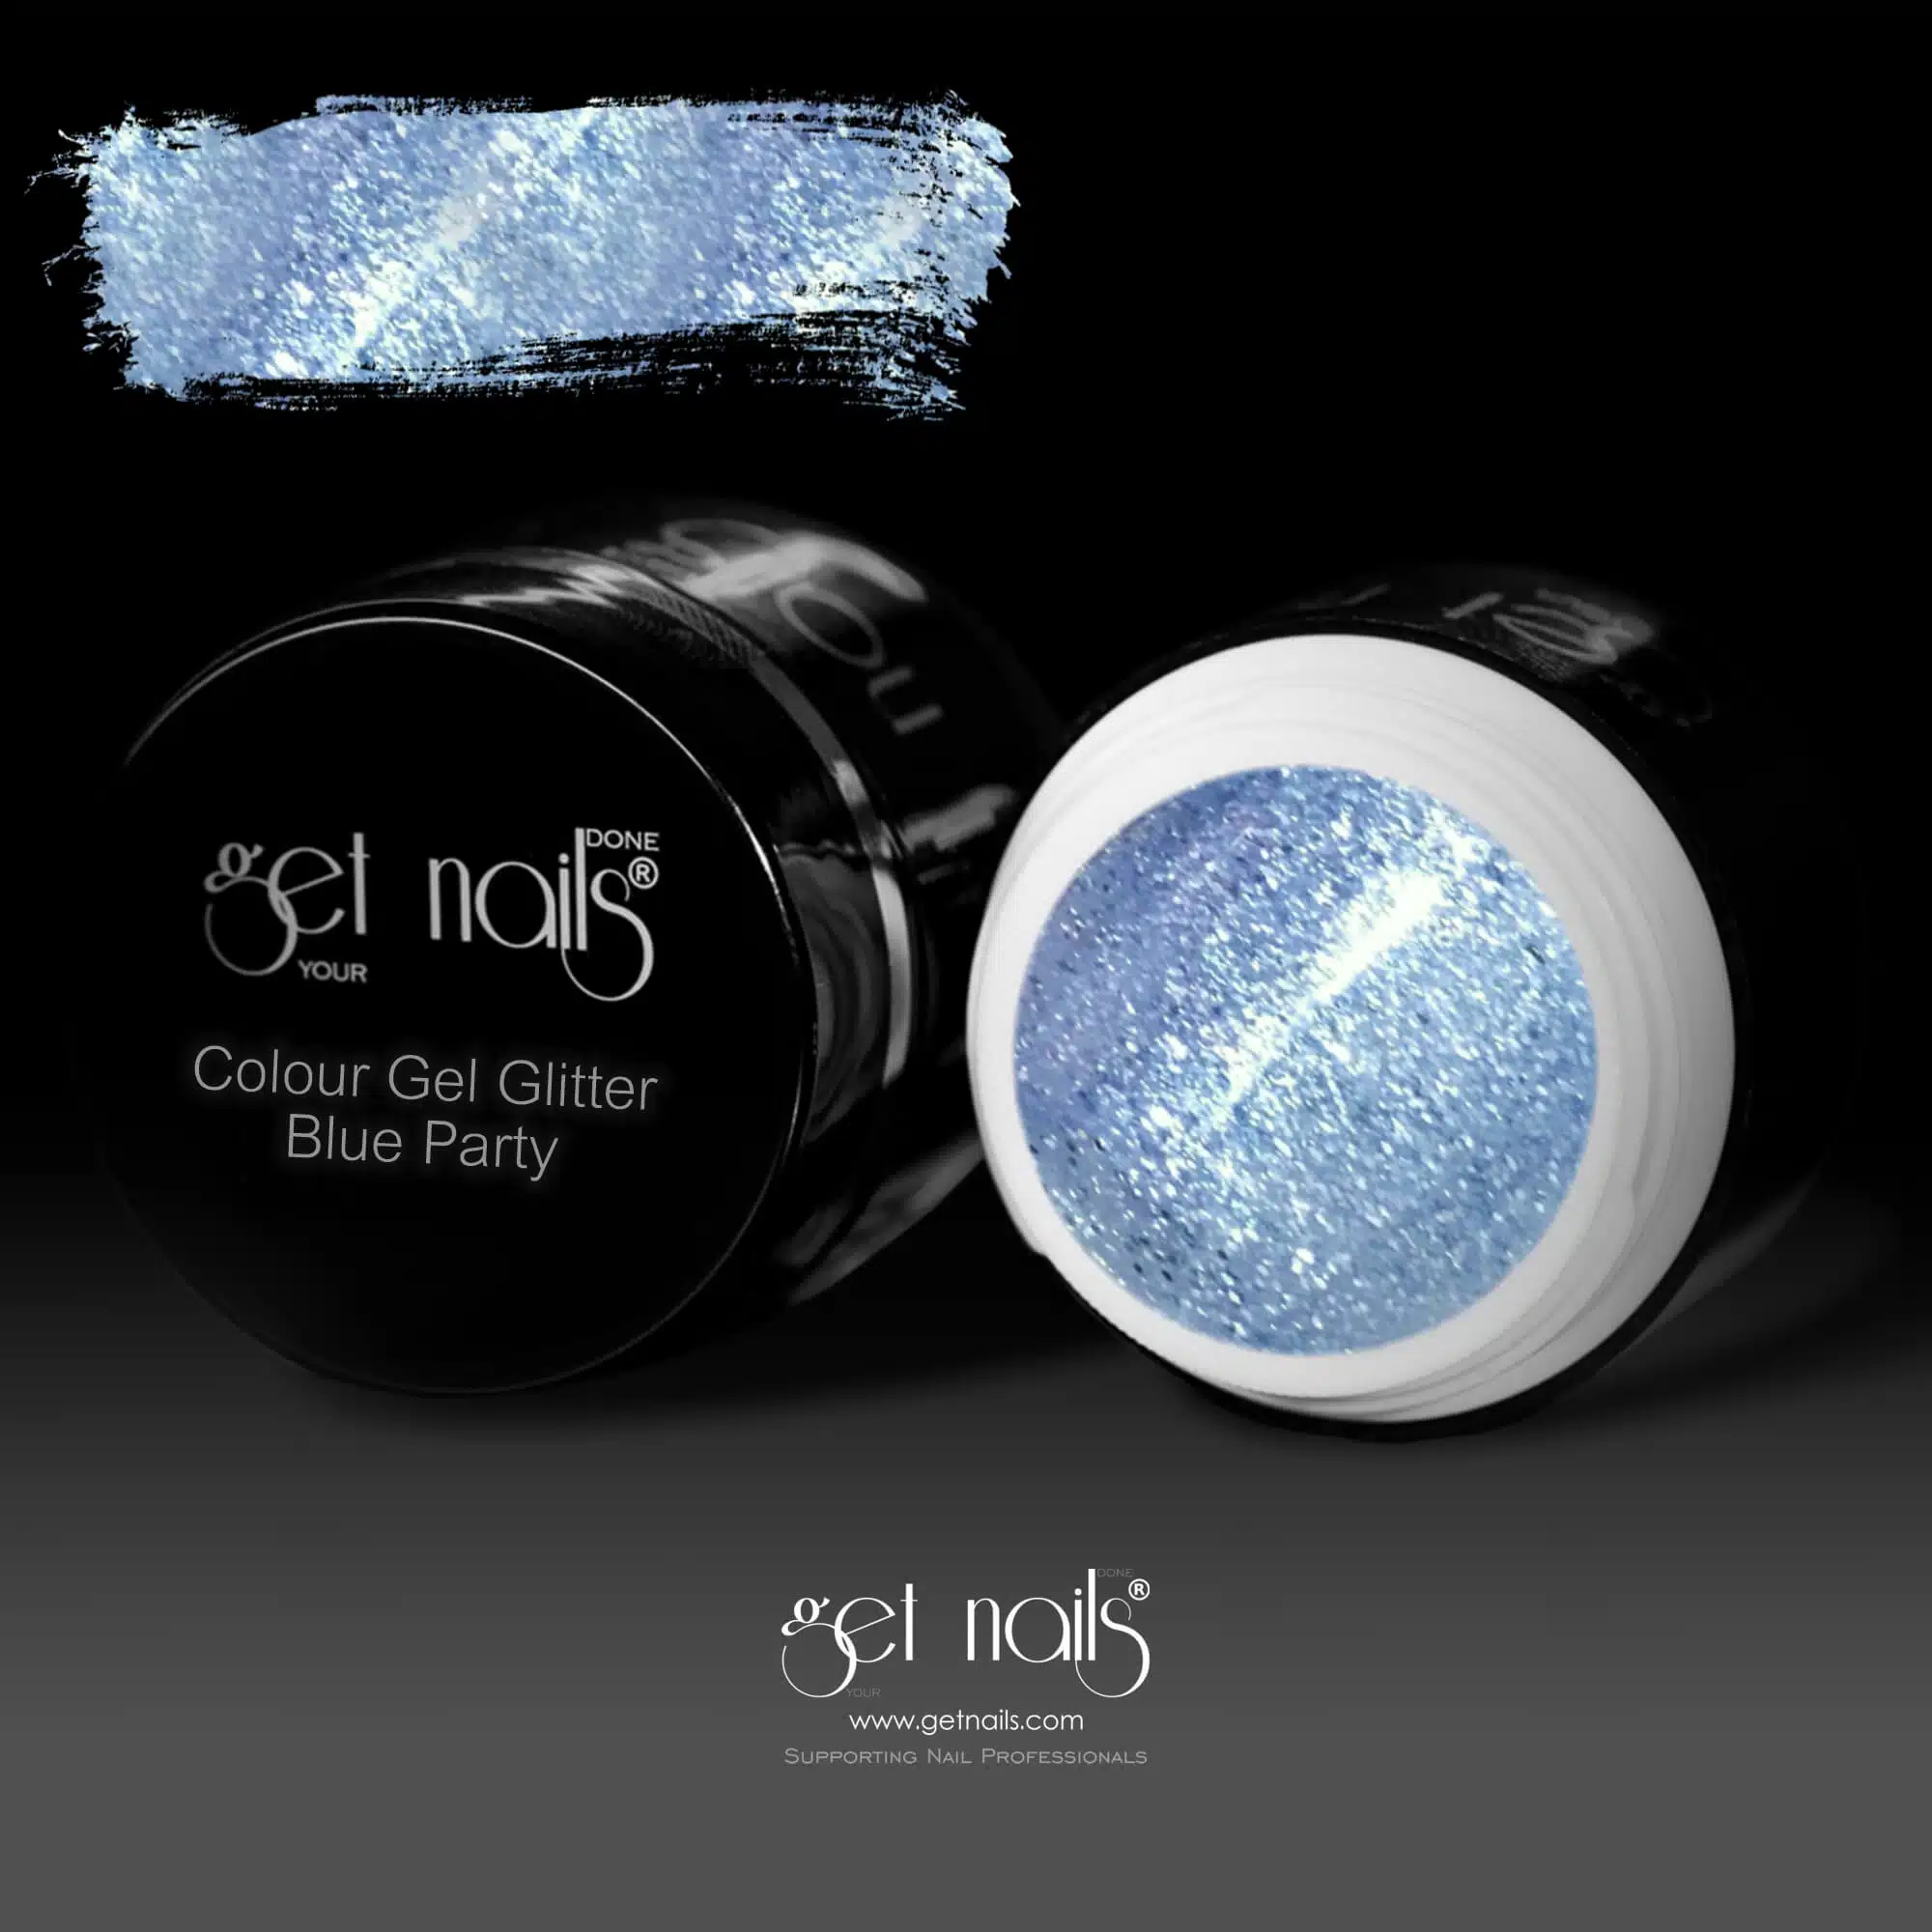 Get Nails Austria - Gel colorato Glitter Blue Party 5g